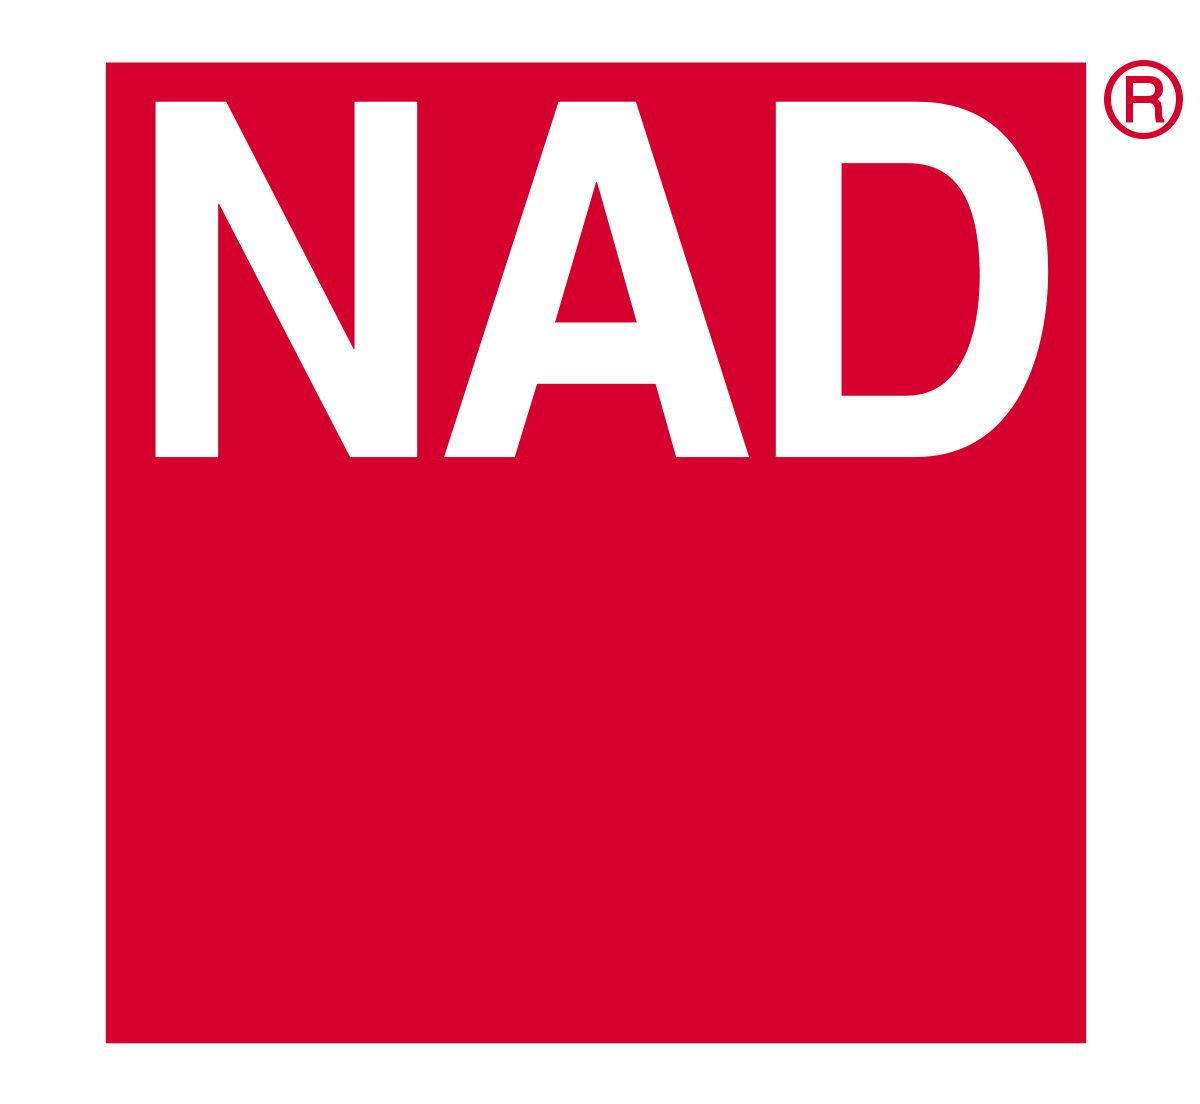 NAD Electronics Logo